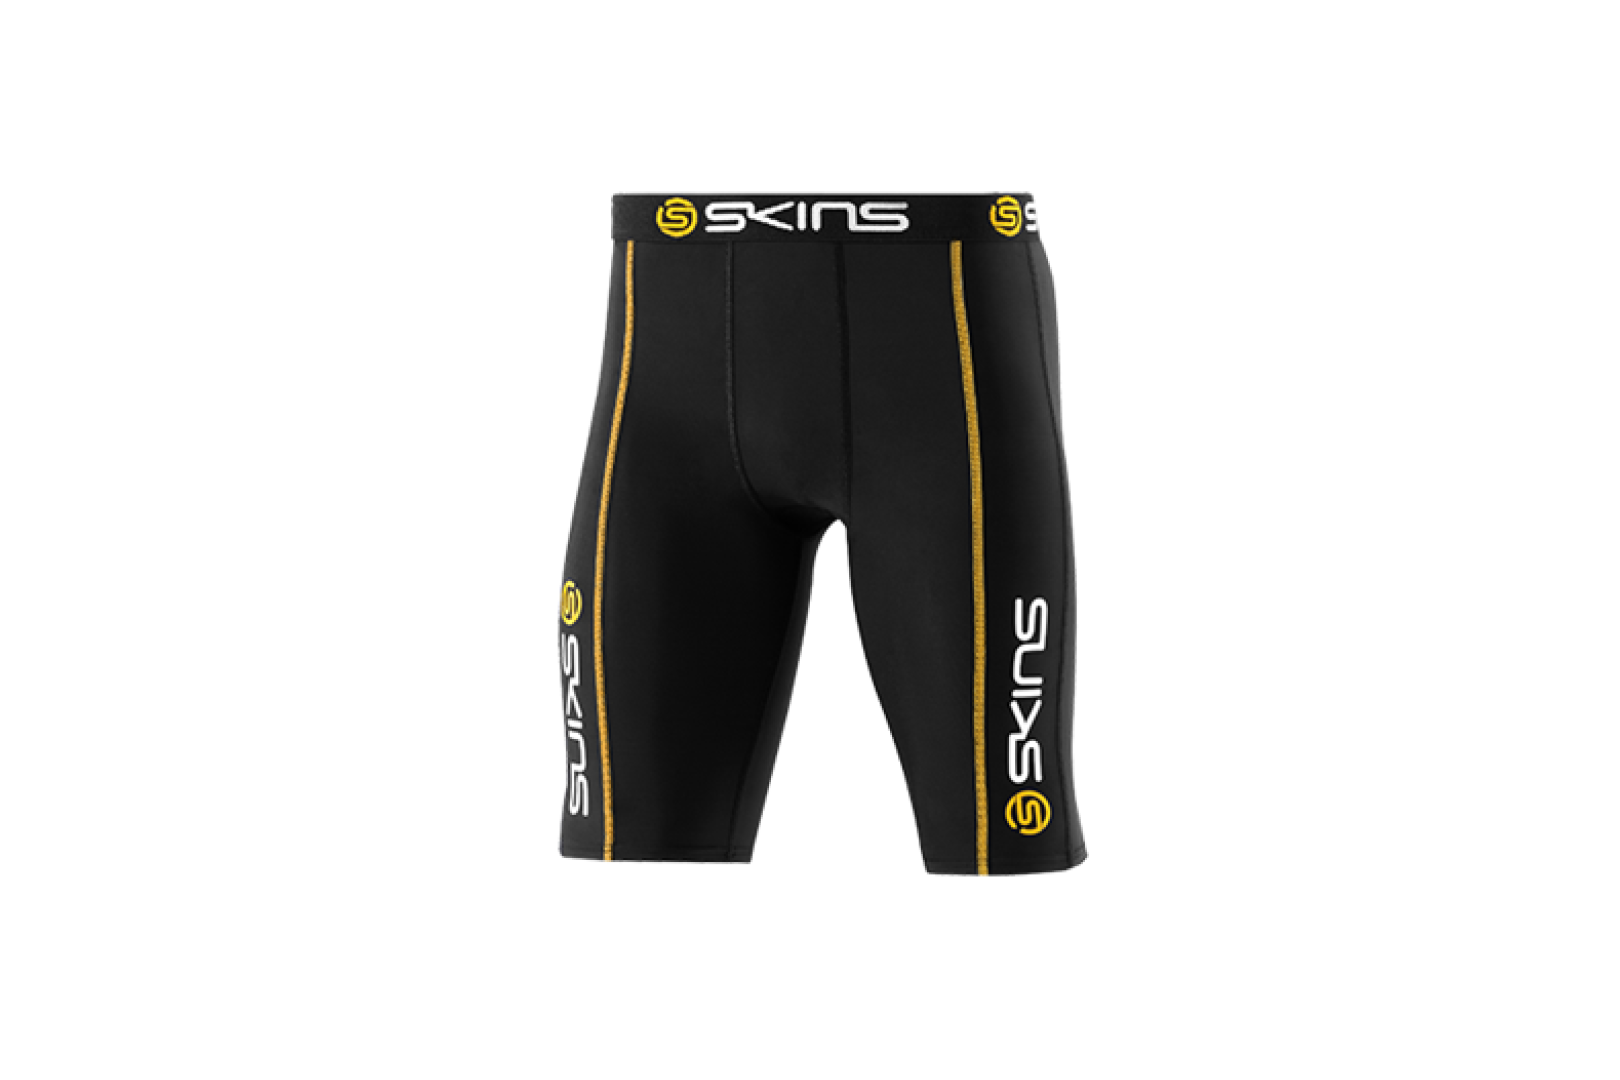  SKINS Men's A200 Compression 1/2 Tights/Shorts, Black